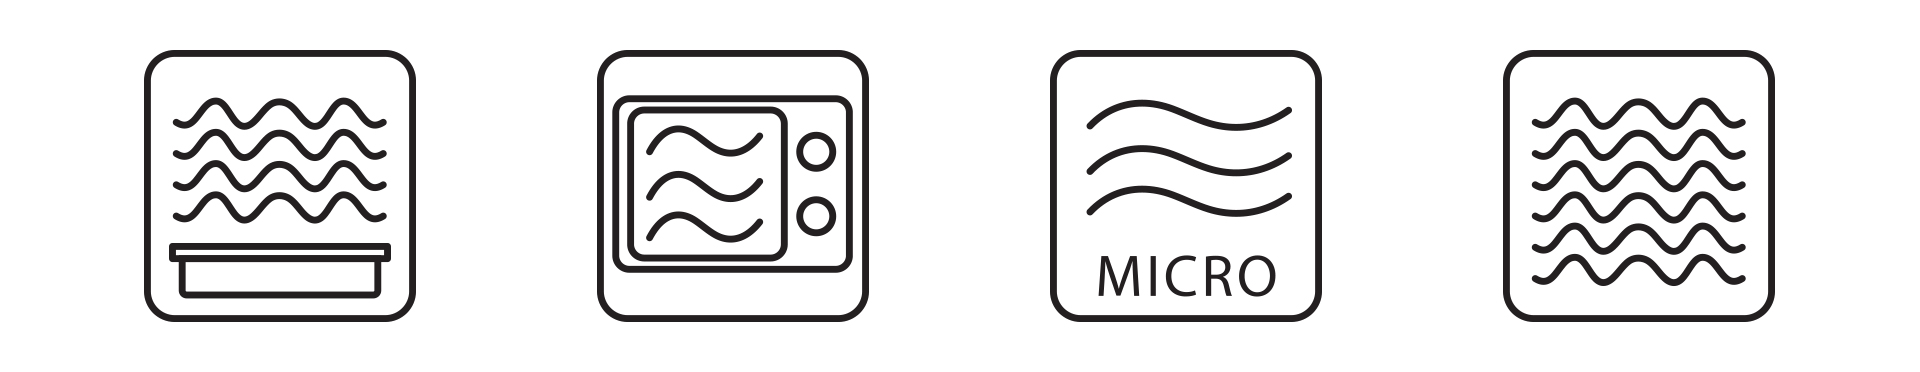 four symbols that represent microwave safe